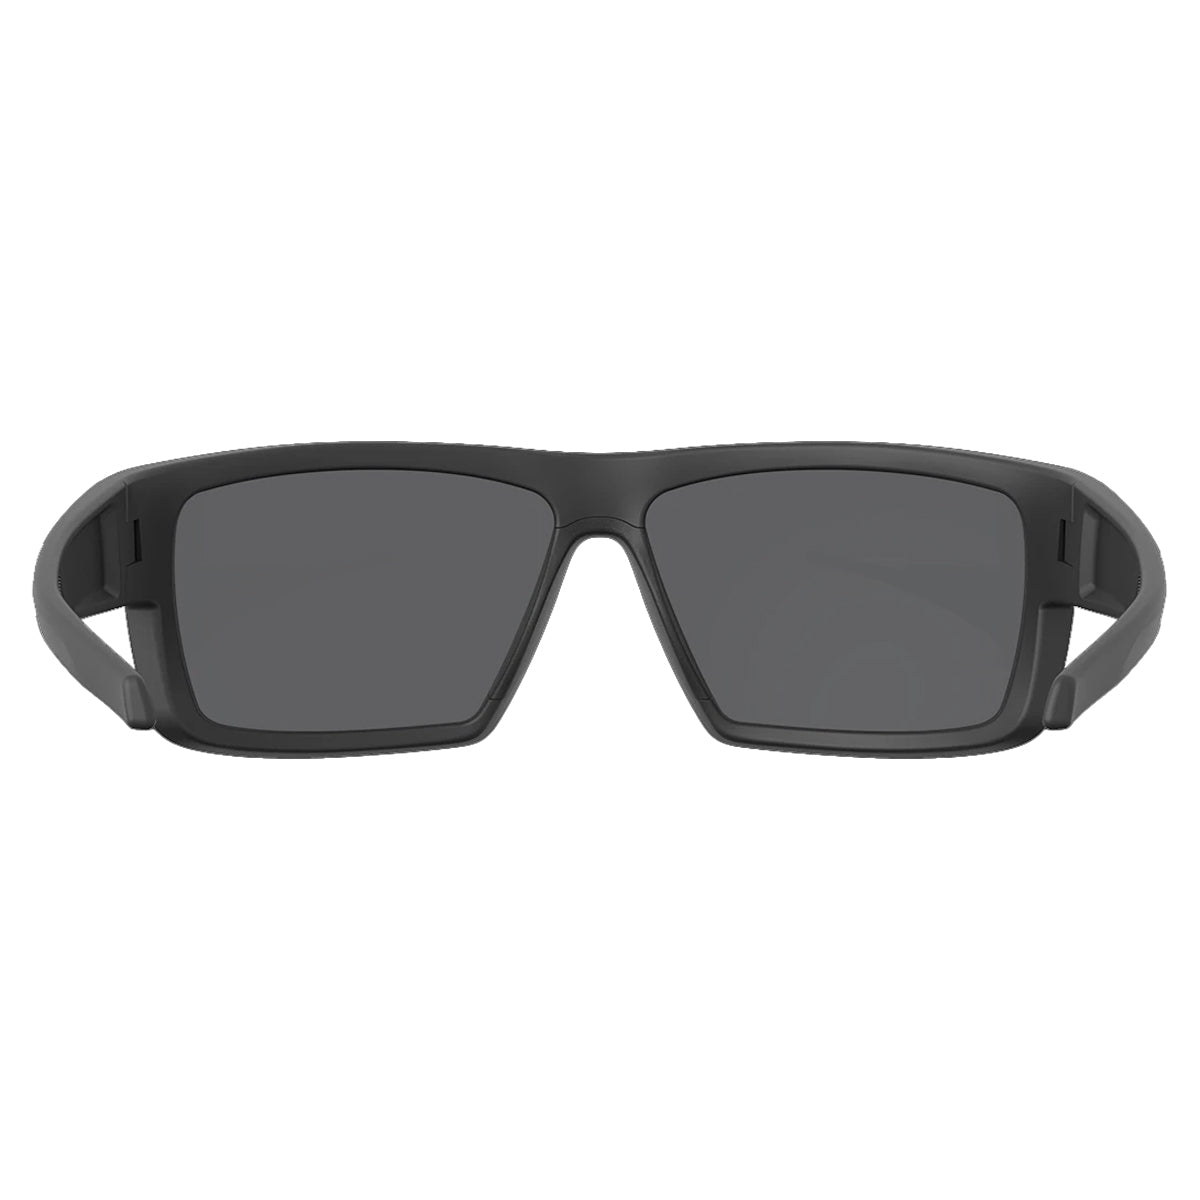 Leupold Switchback Sunglasses